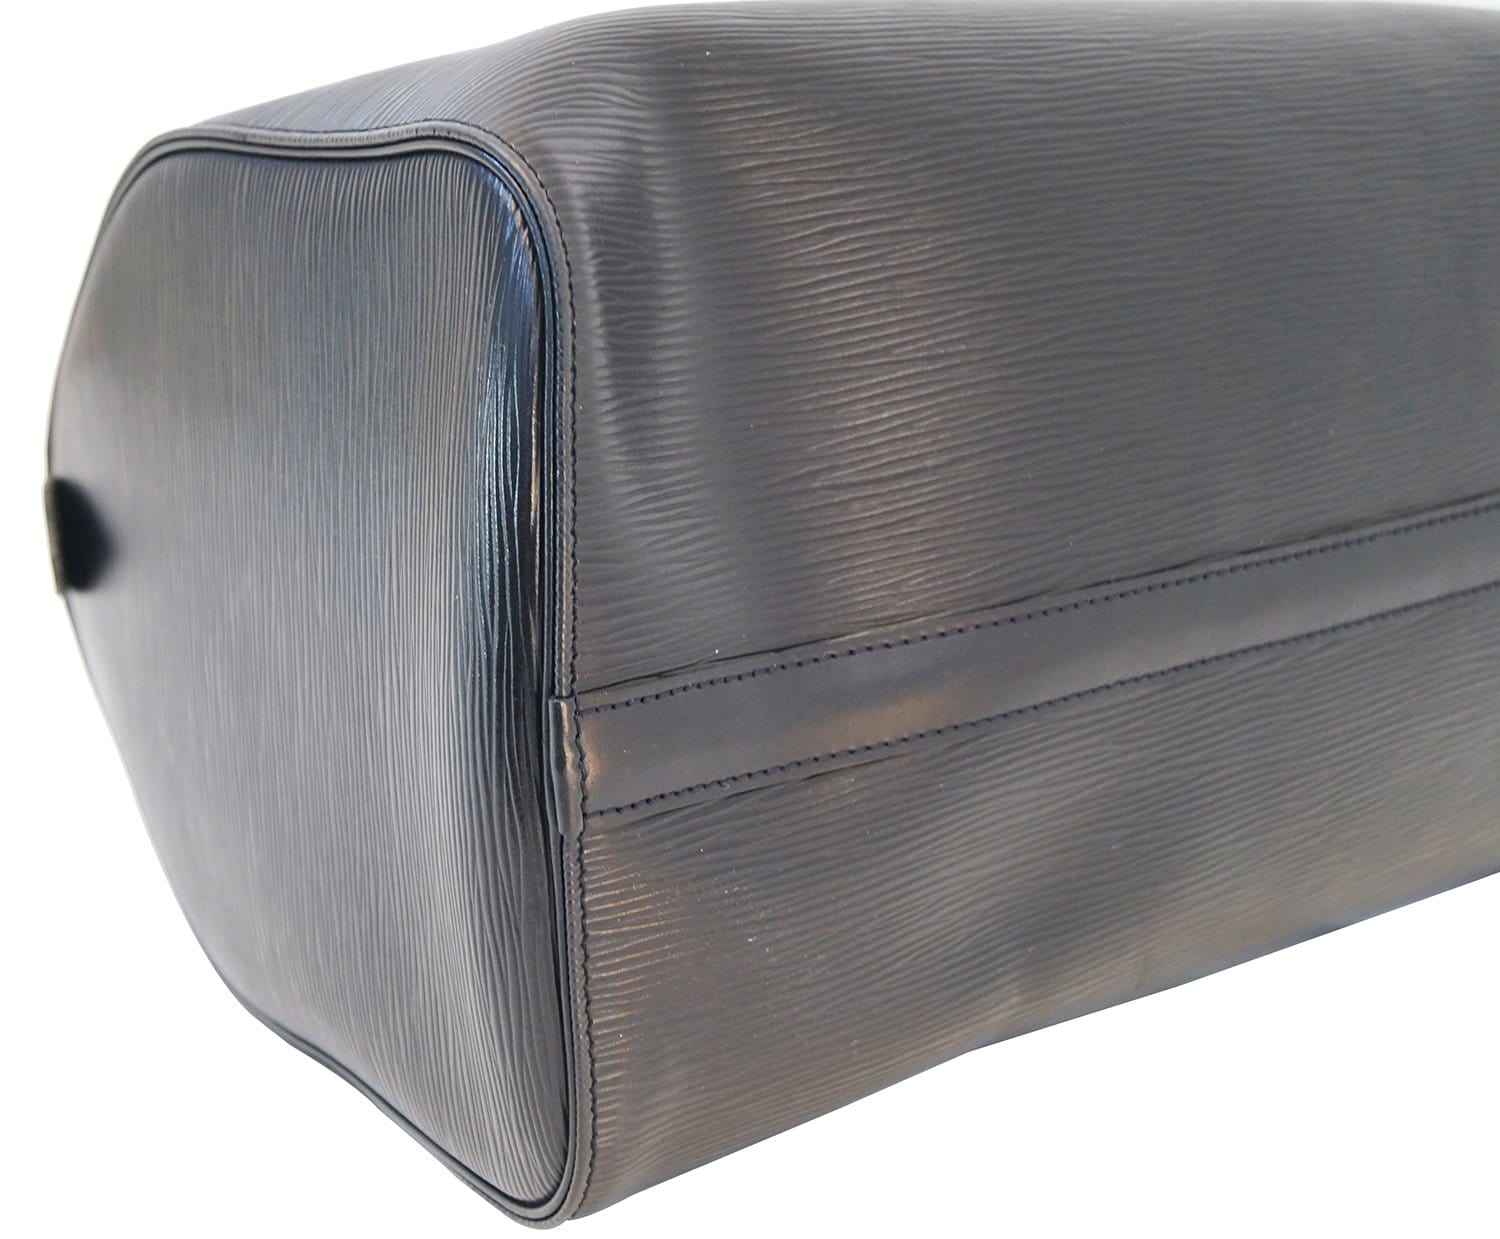 Louis Vuitton Speedy Handbag 381936